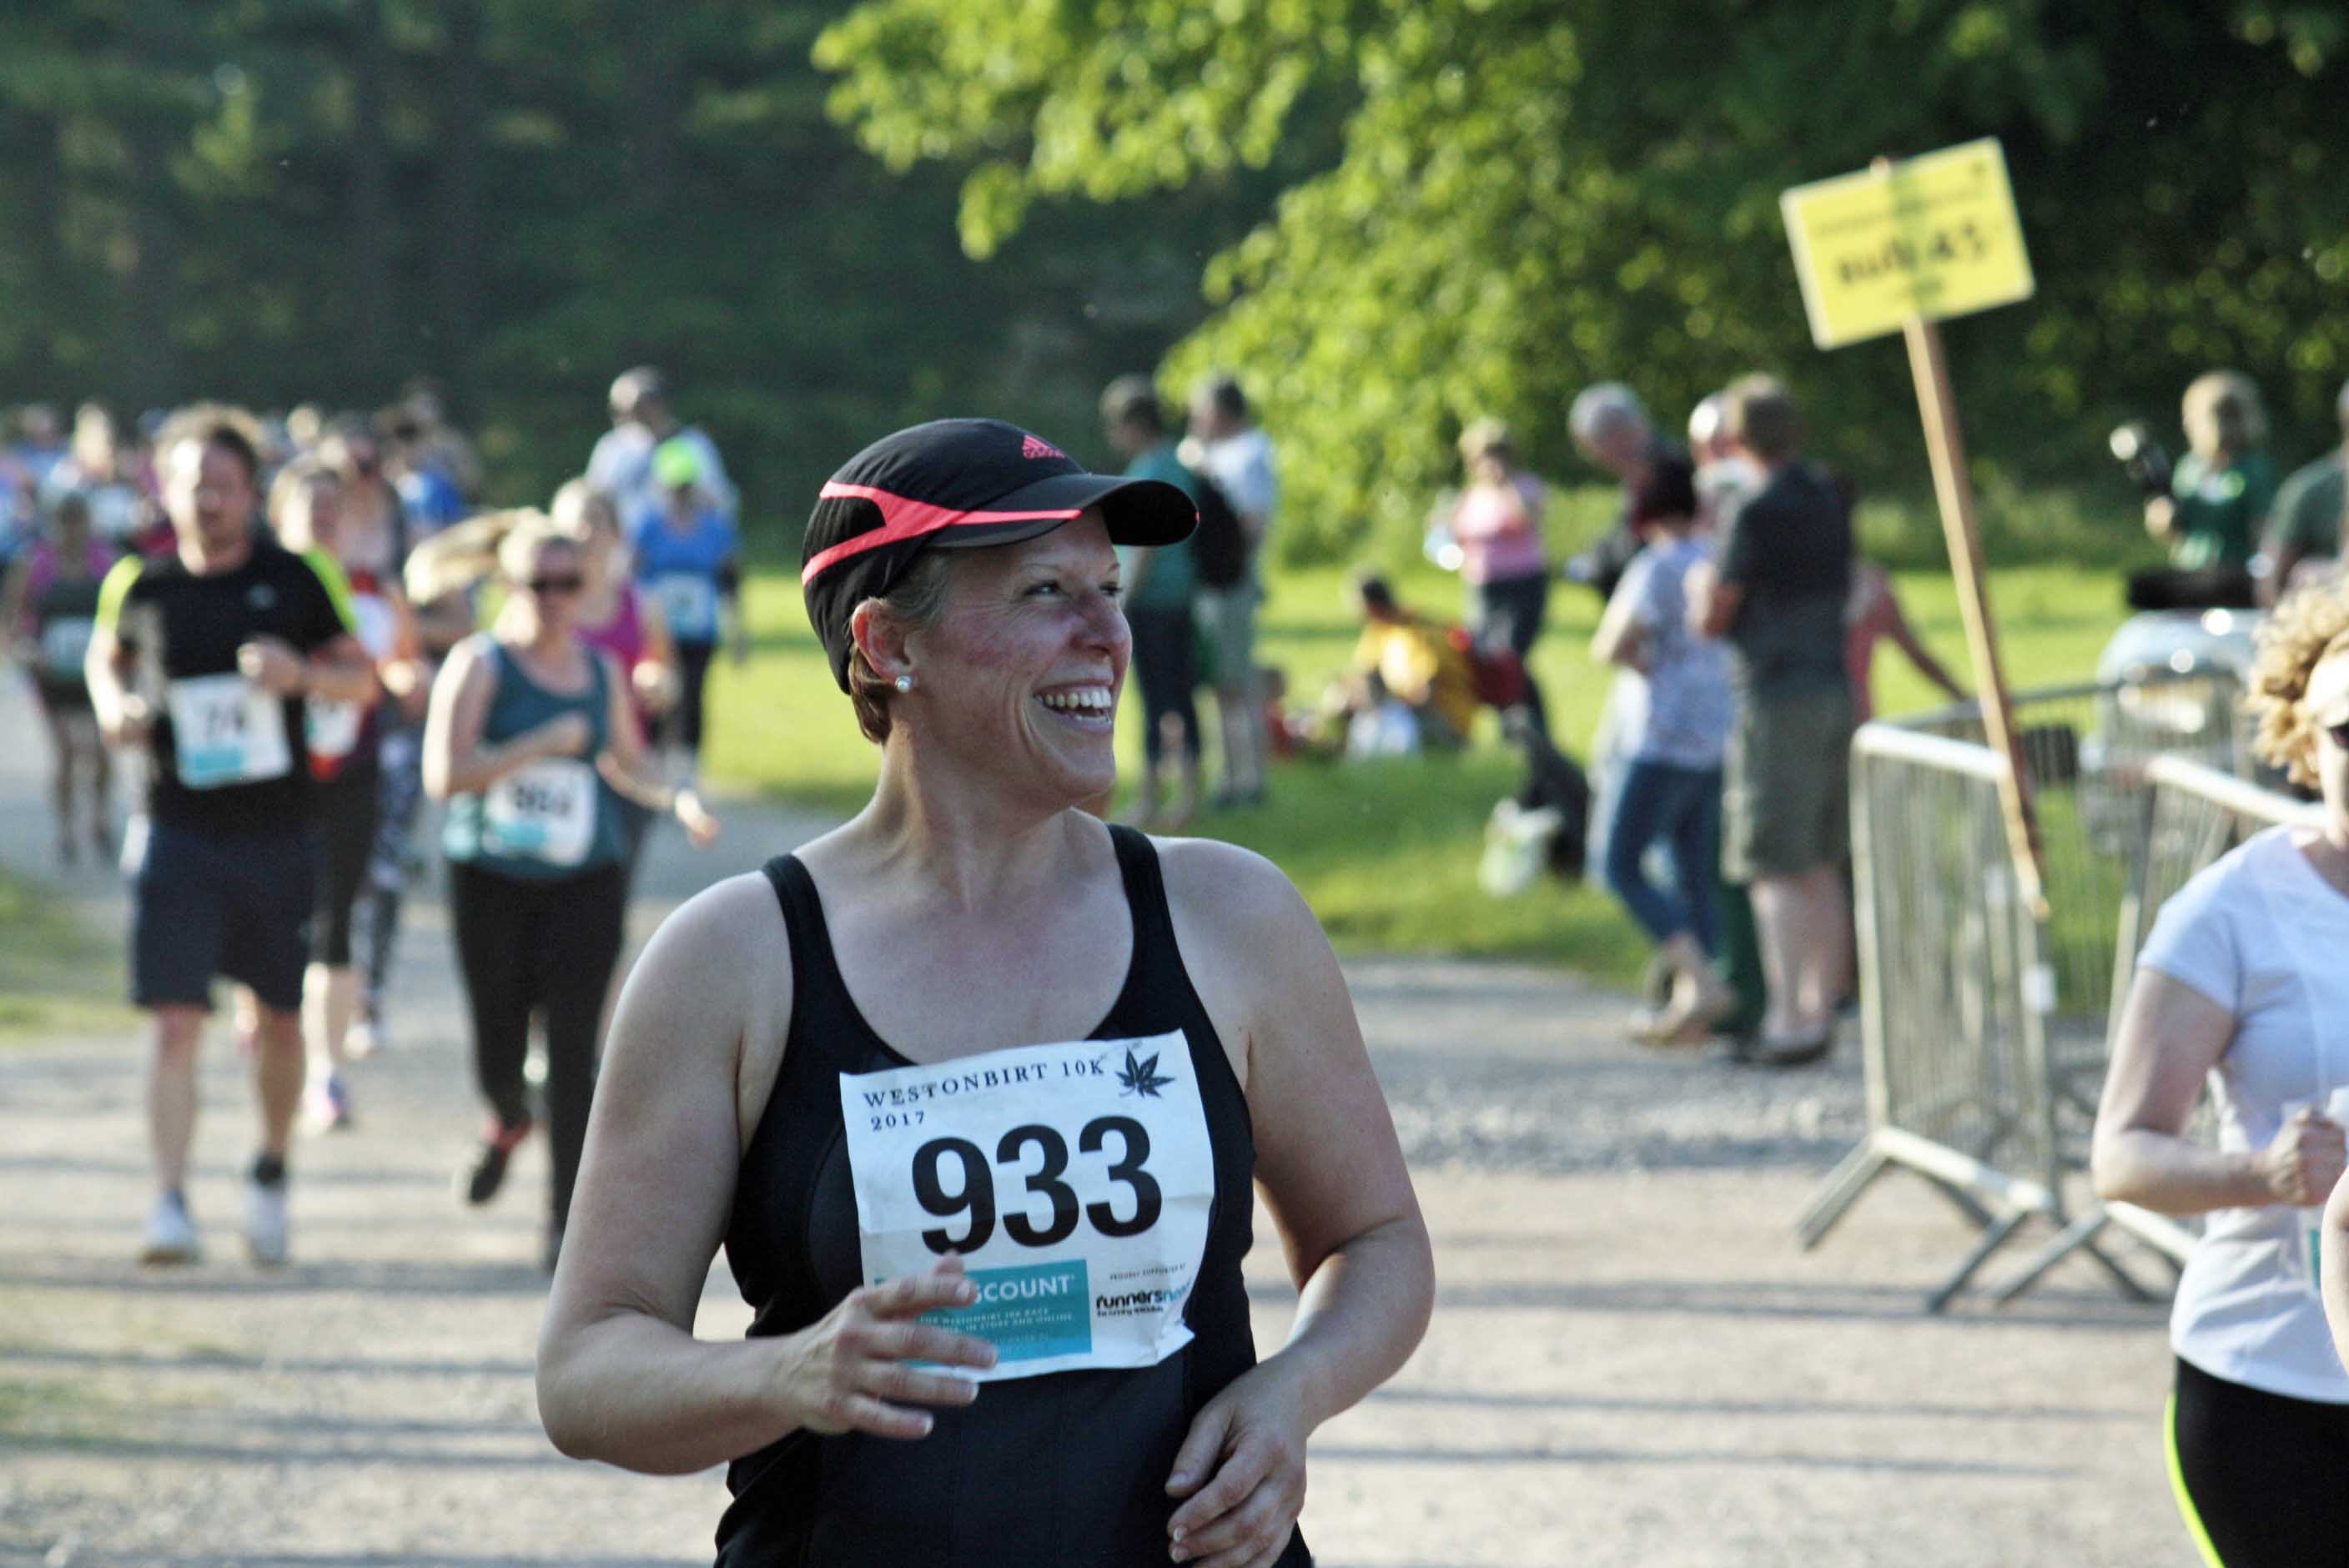 Lady running a 10K sponsored run